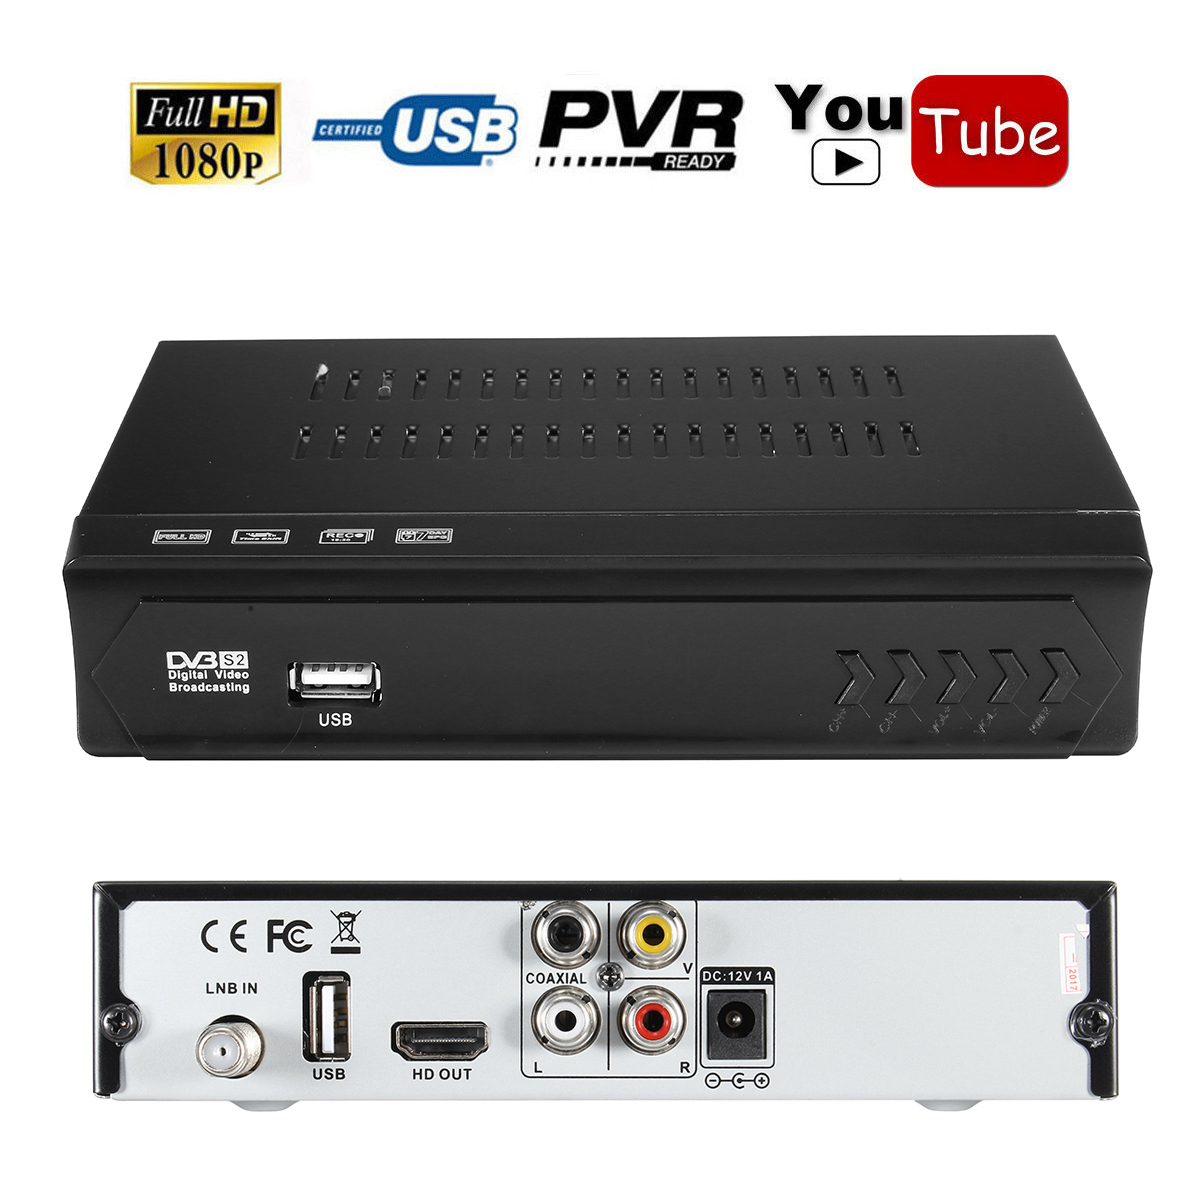 1080P-DVB-S2-HD-Digital-TV-Signal-Receiver-USB-WIFI-with-Remote-Control-1223175